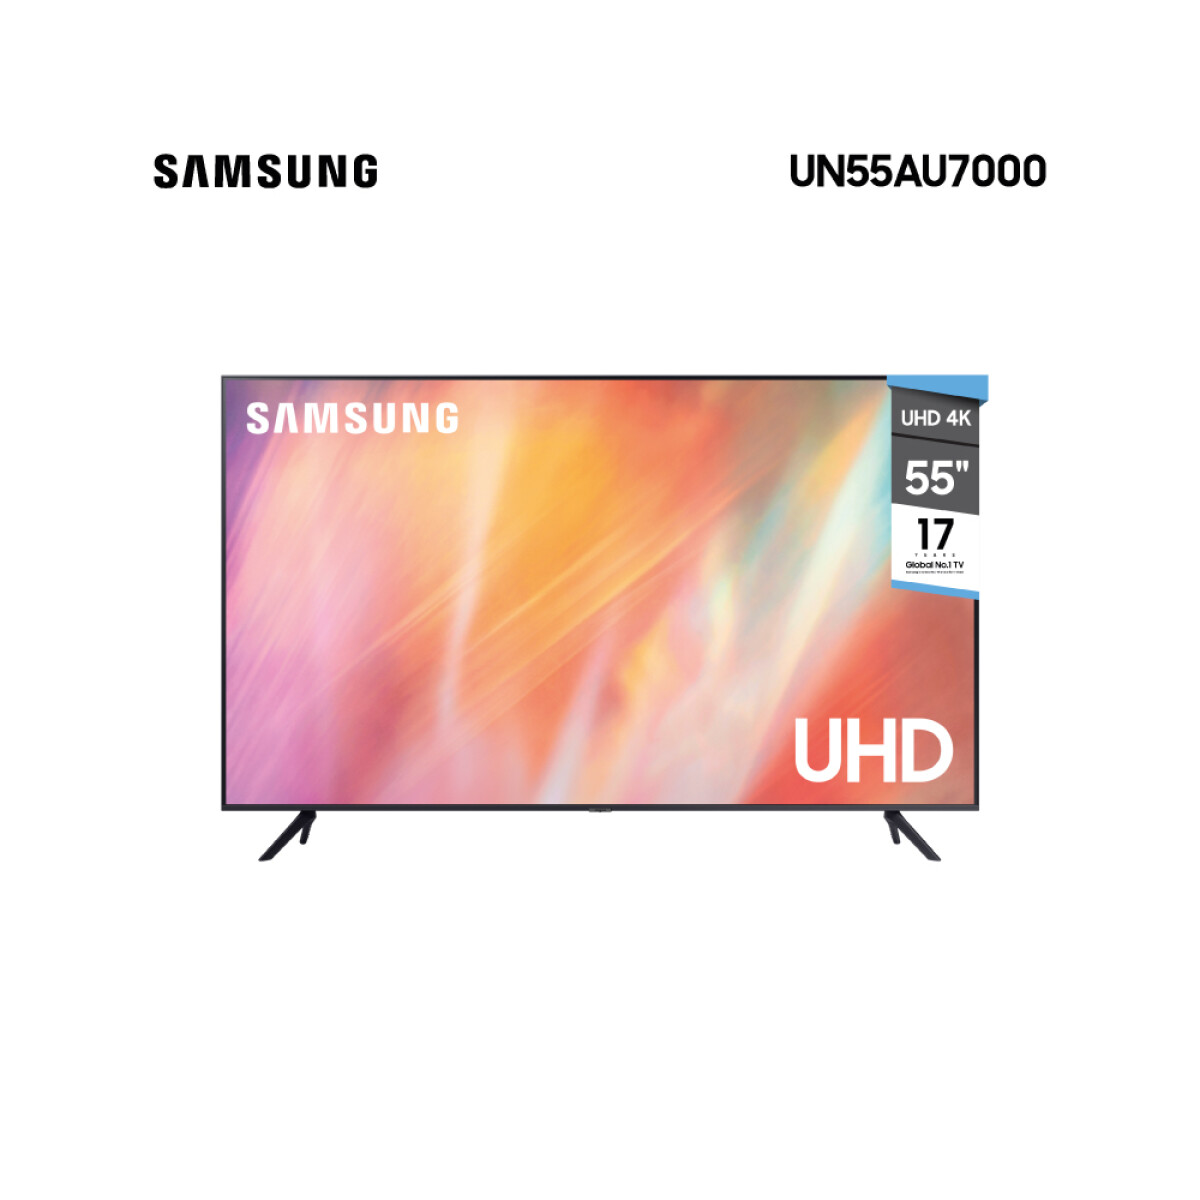 Smart TV Samsung 55" UHD 4K UN55AU7000 